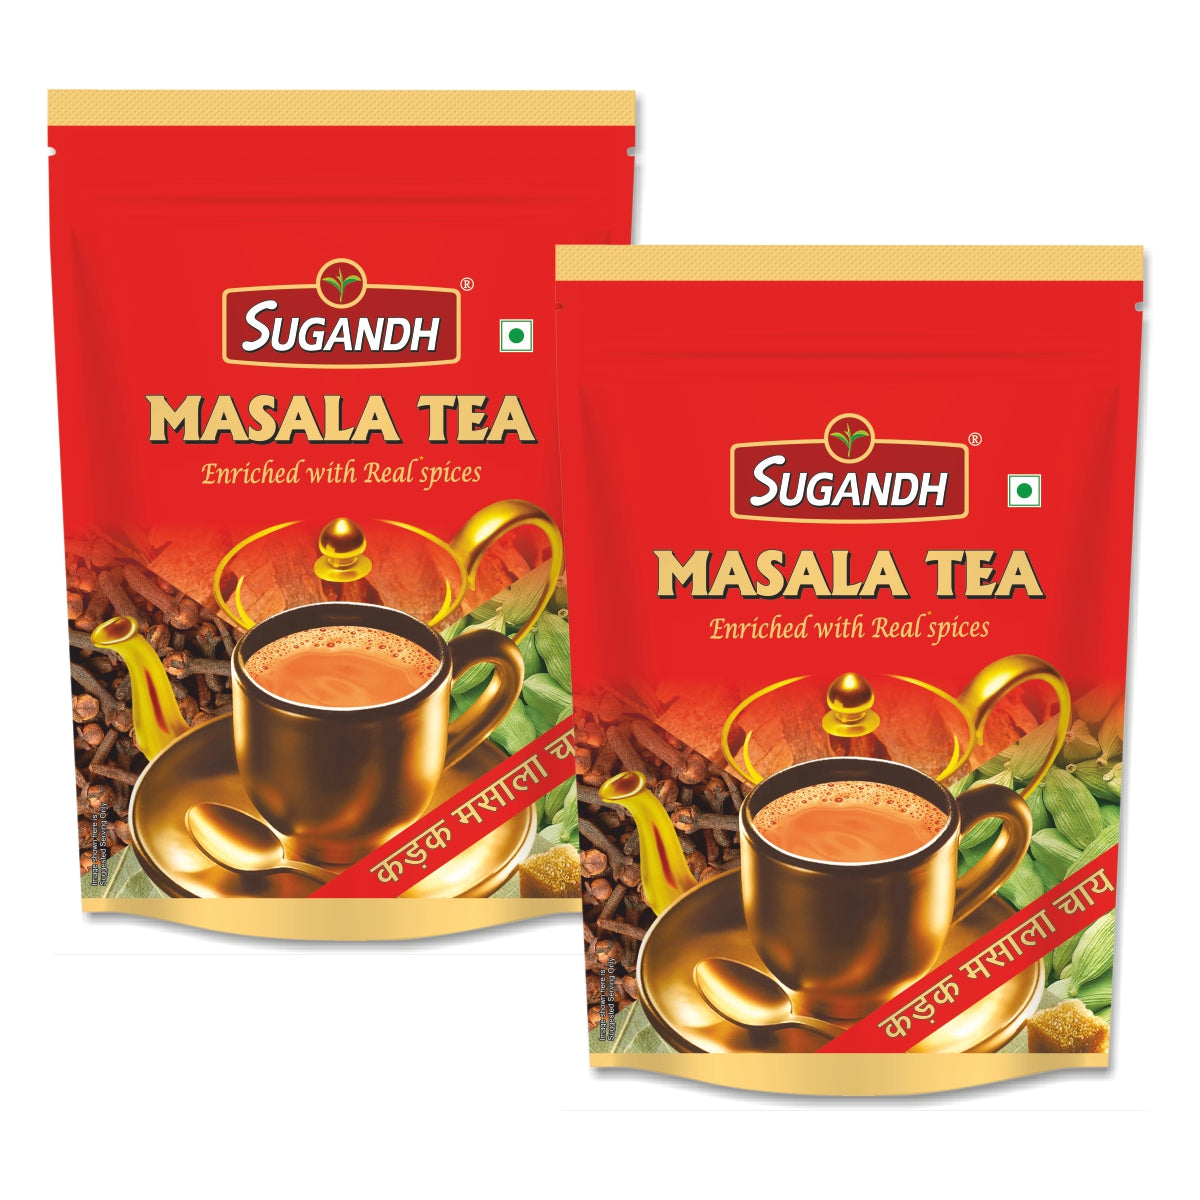 Sugandh Masala Tea 2 kg (Pack of 2 x 1 kg Each)